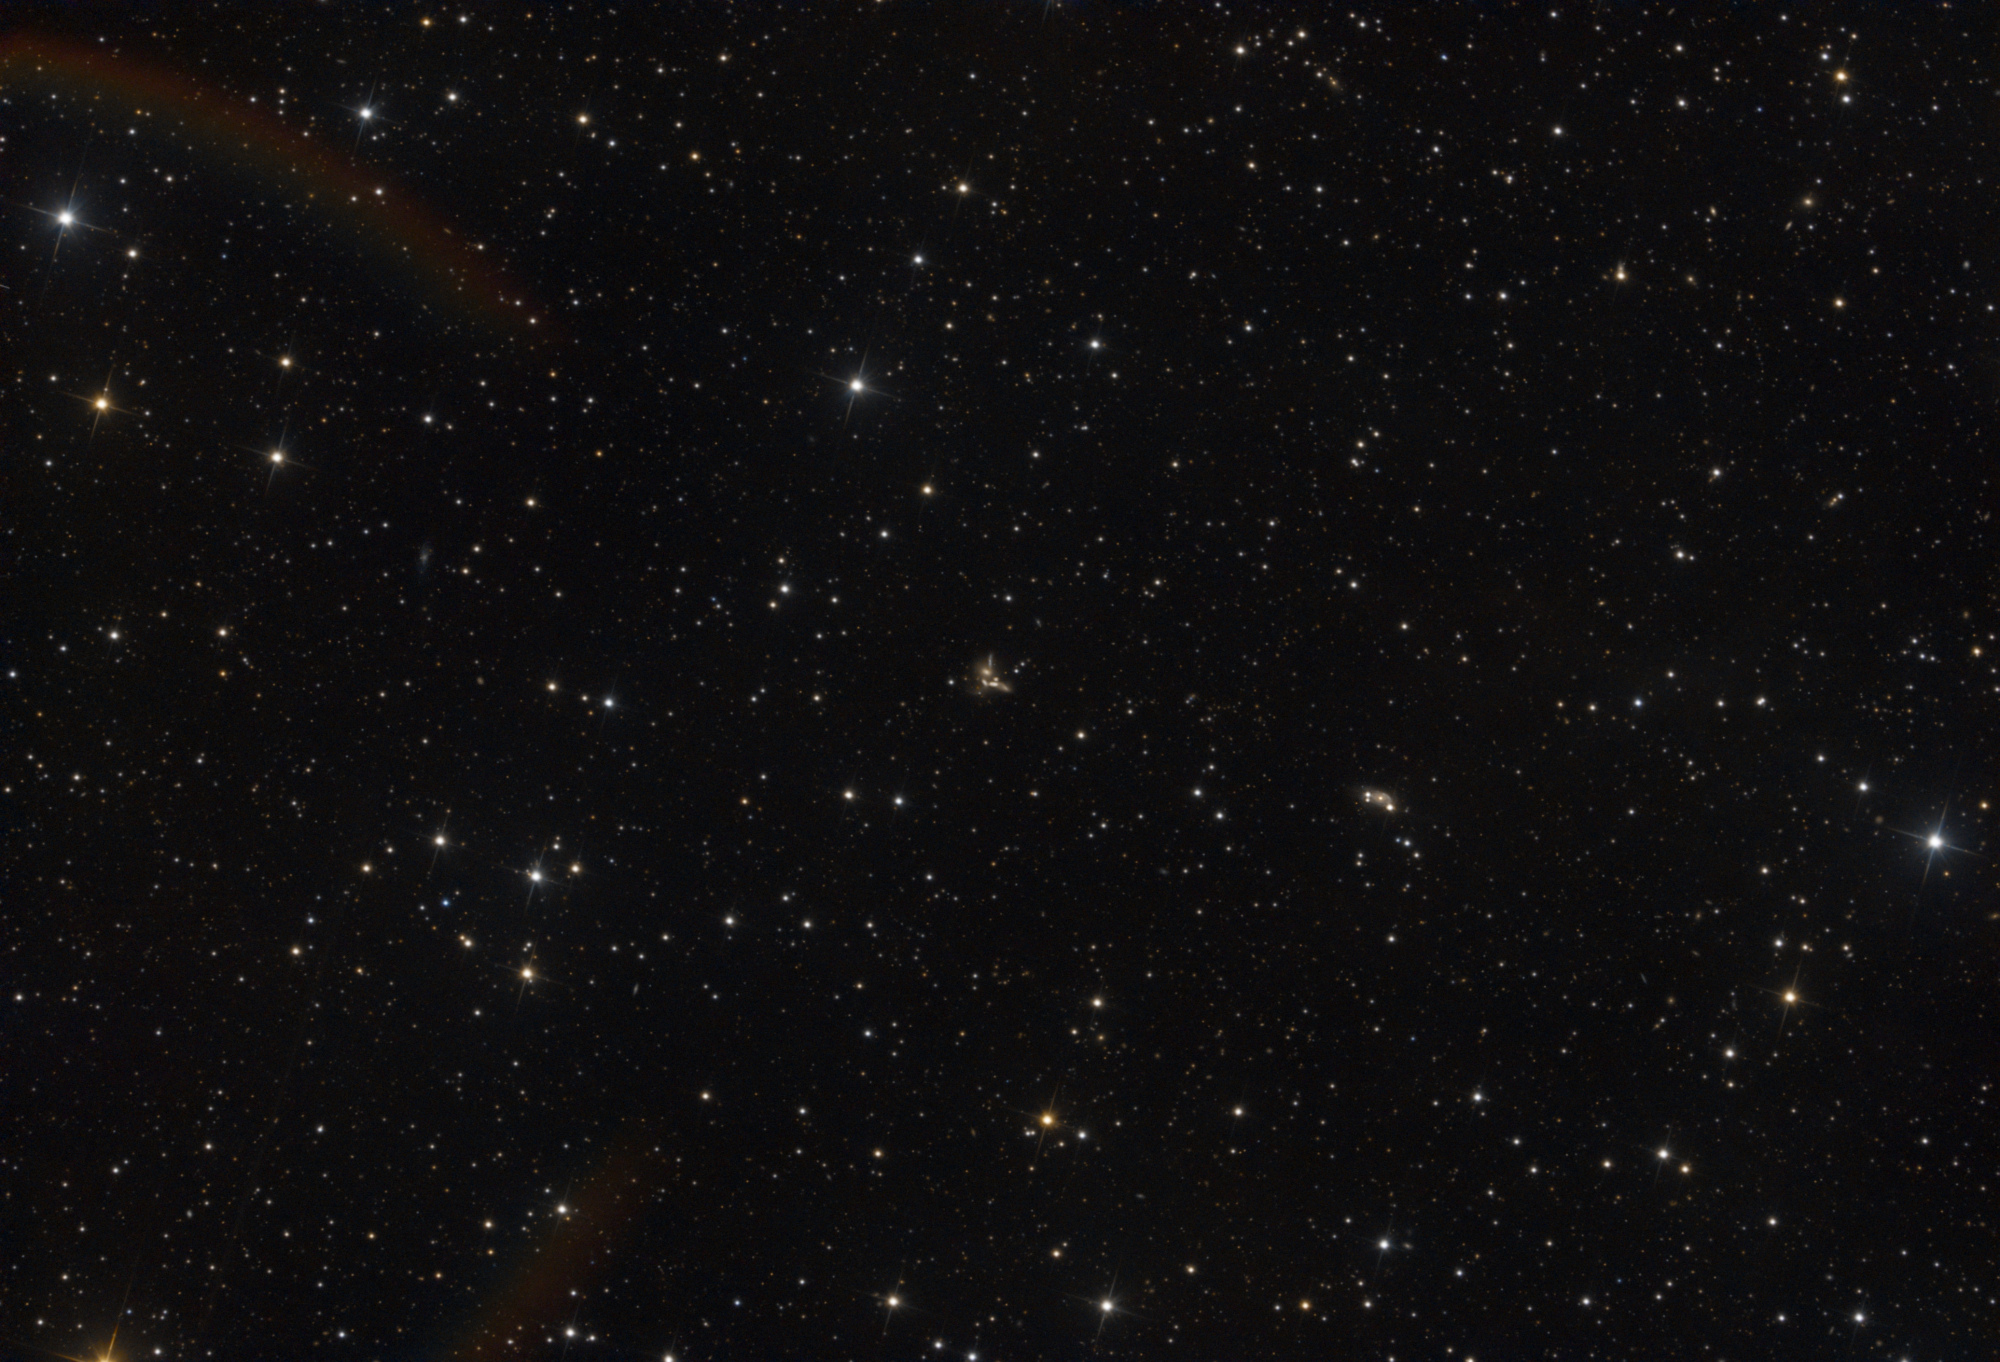 r_bkg_proc_NGC6027_396poses_Stud_miror_grad_photom_Green_Asinh_HGS_deconv_Sat_montage_comp.thumb.jpg.8aced5aff5d3579c360cb5cd529d5ebe.jpg